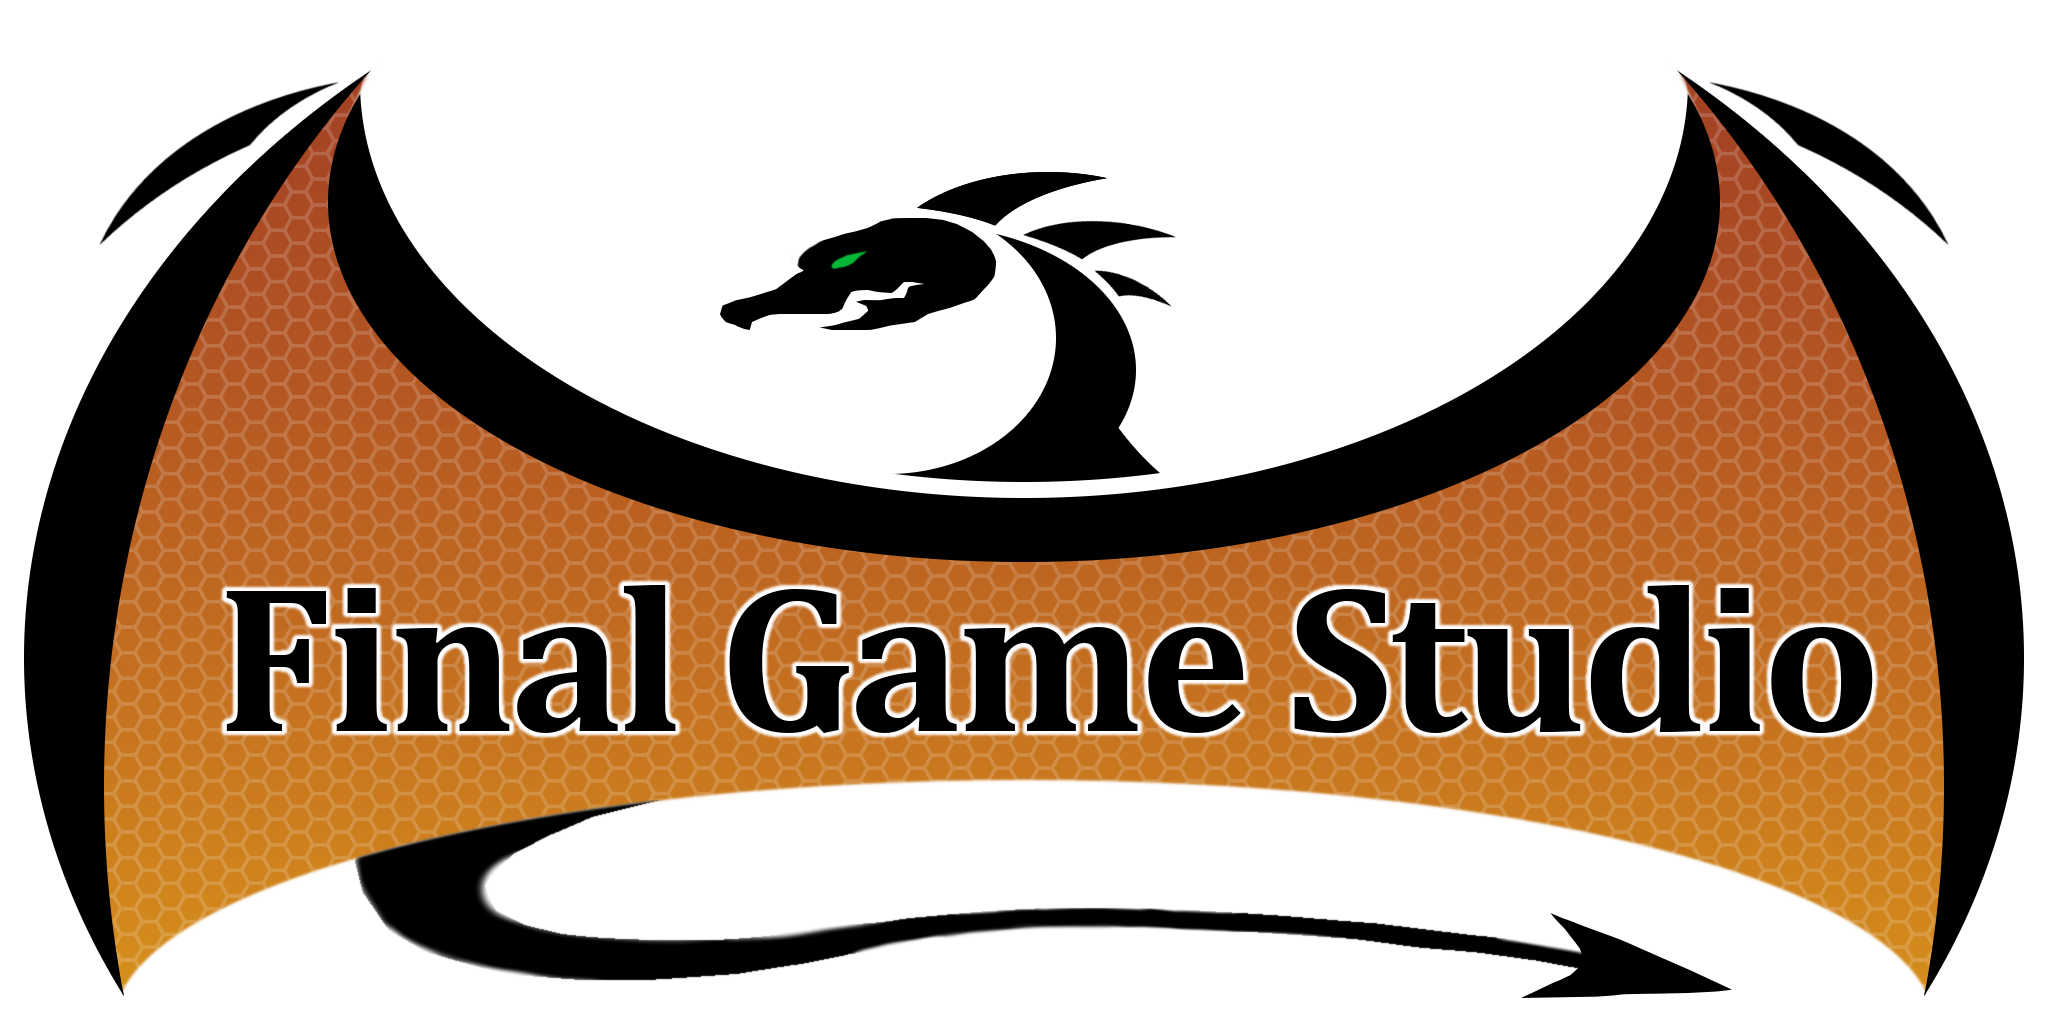 Final Game Studio